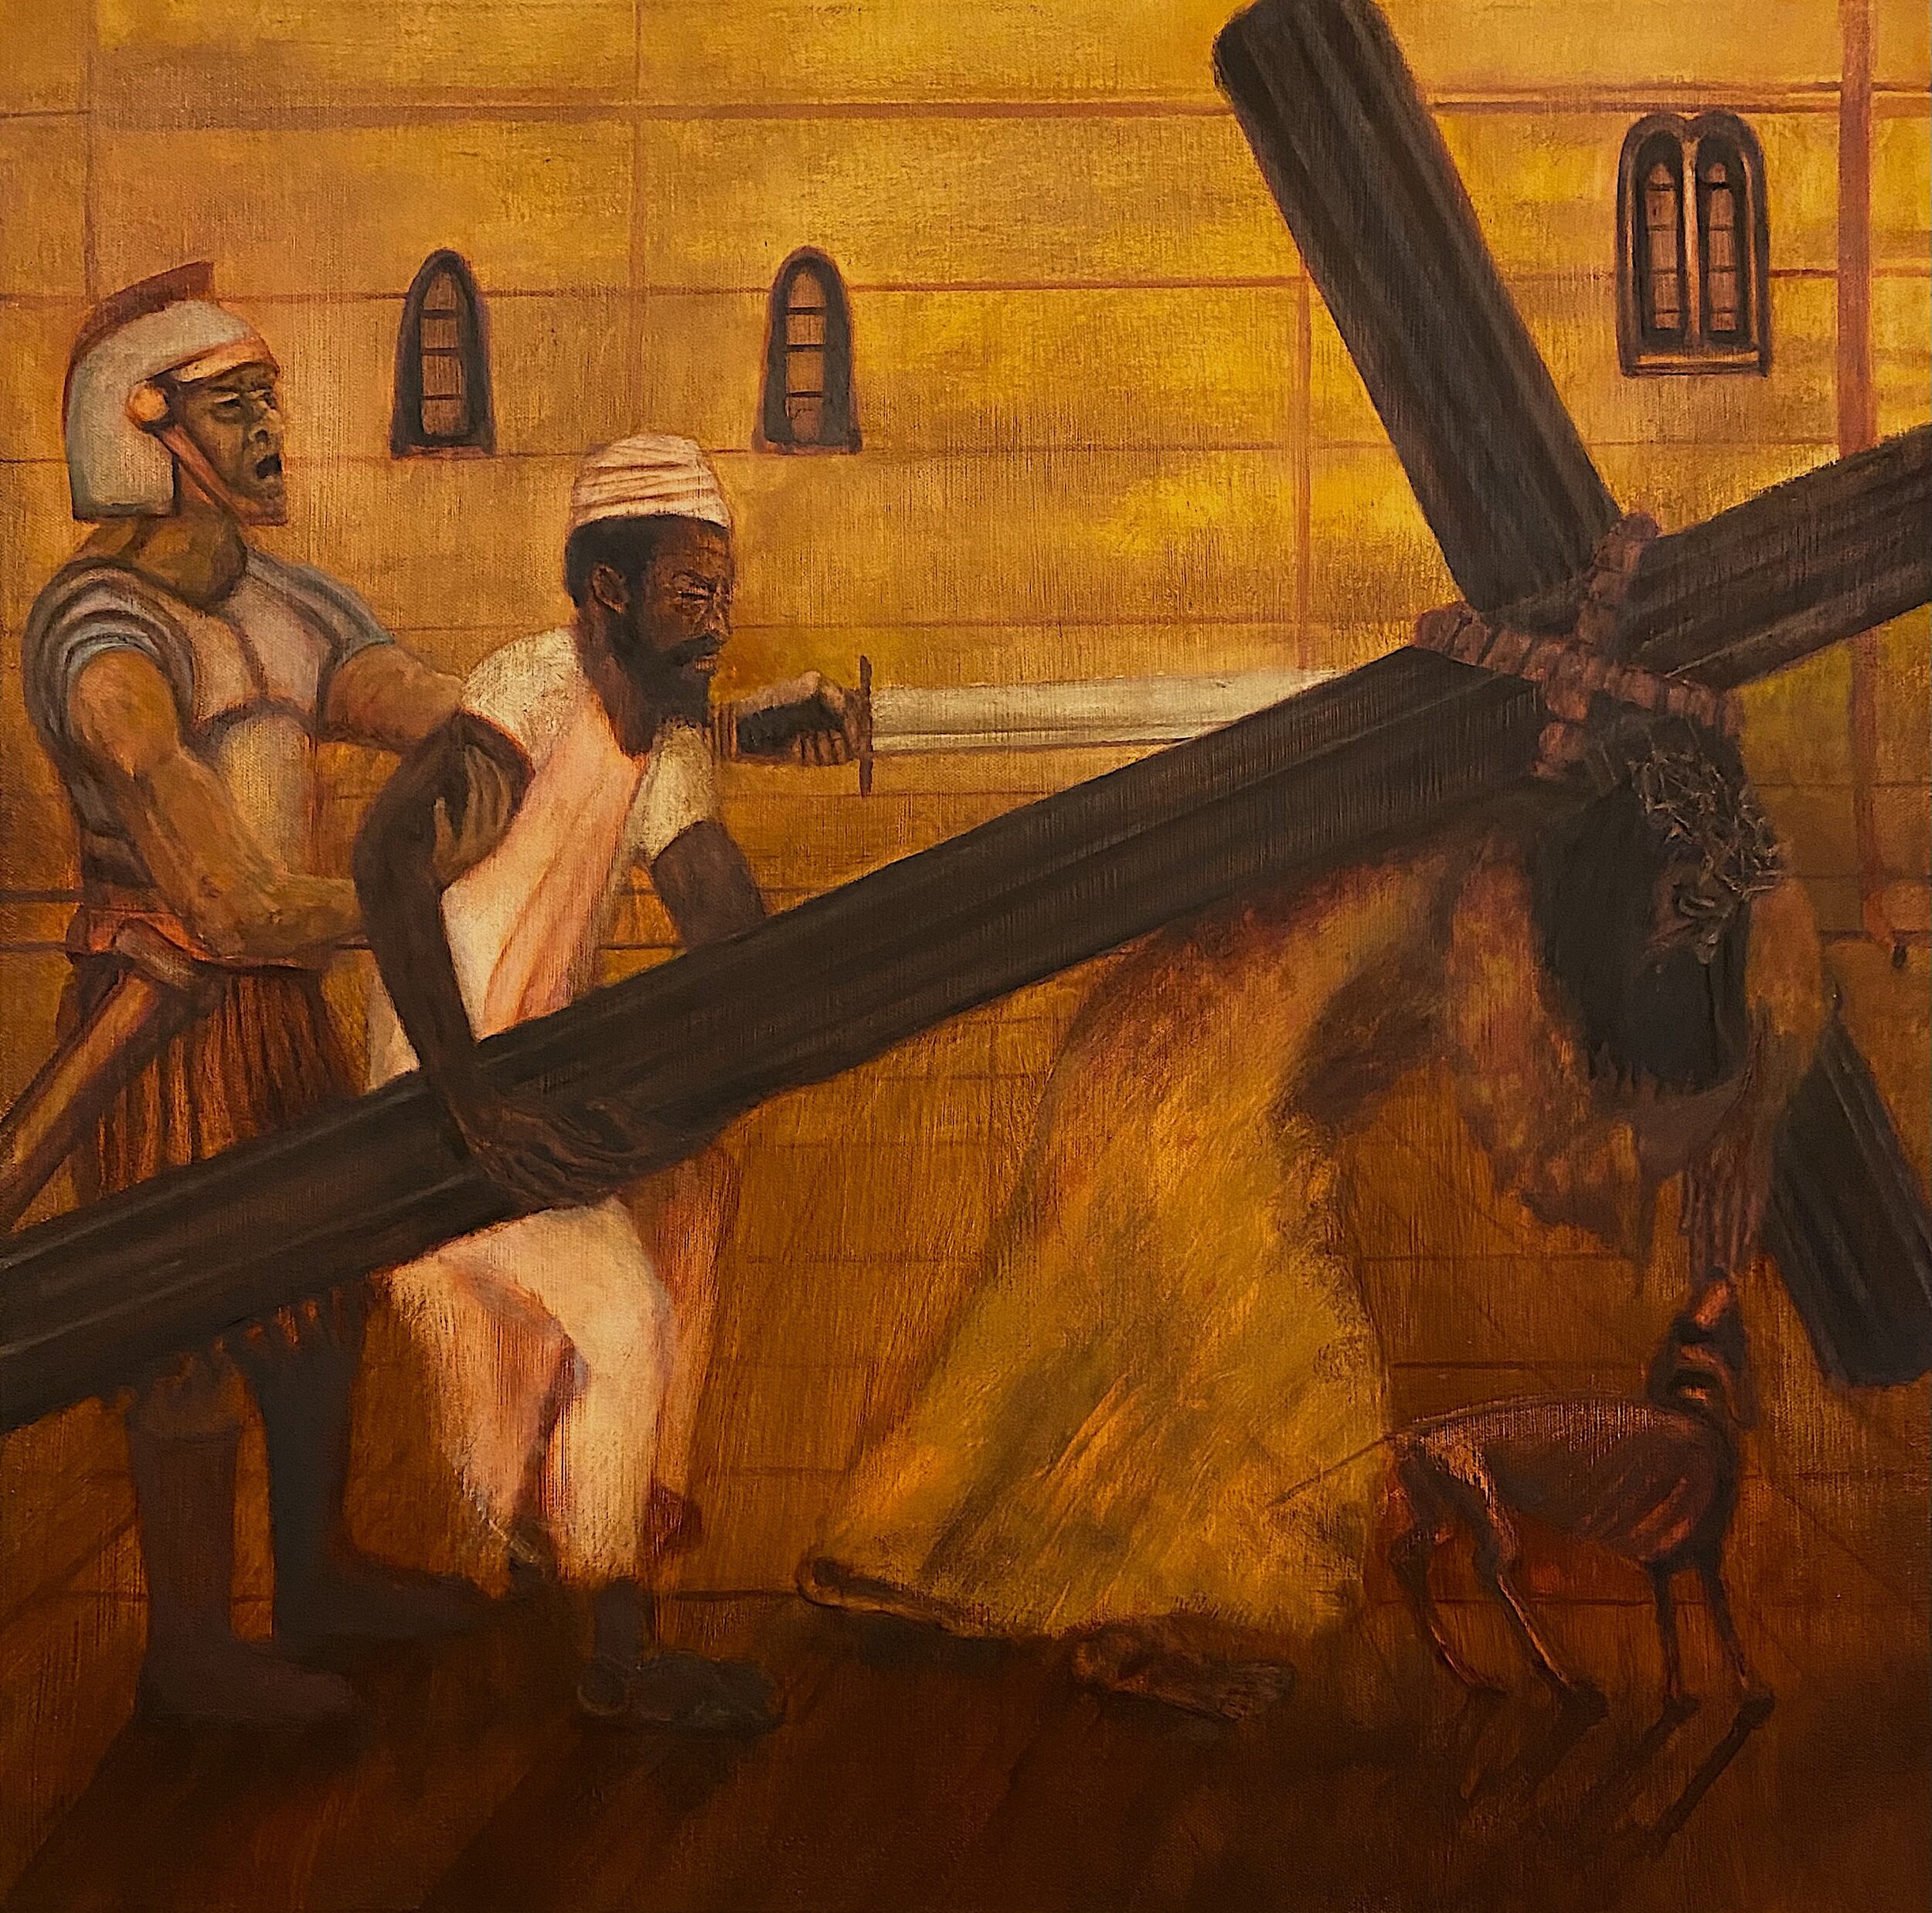 Station 7 - Simon of Cyrene Helps Carry the Cross